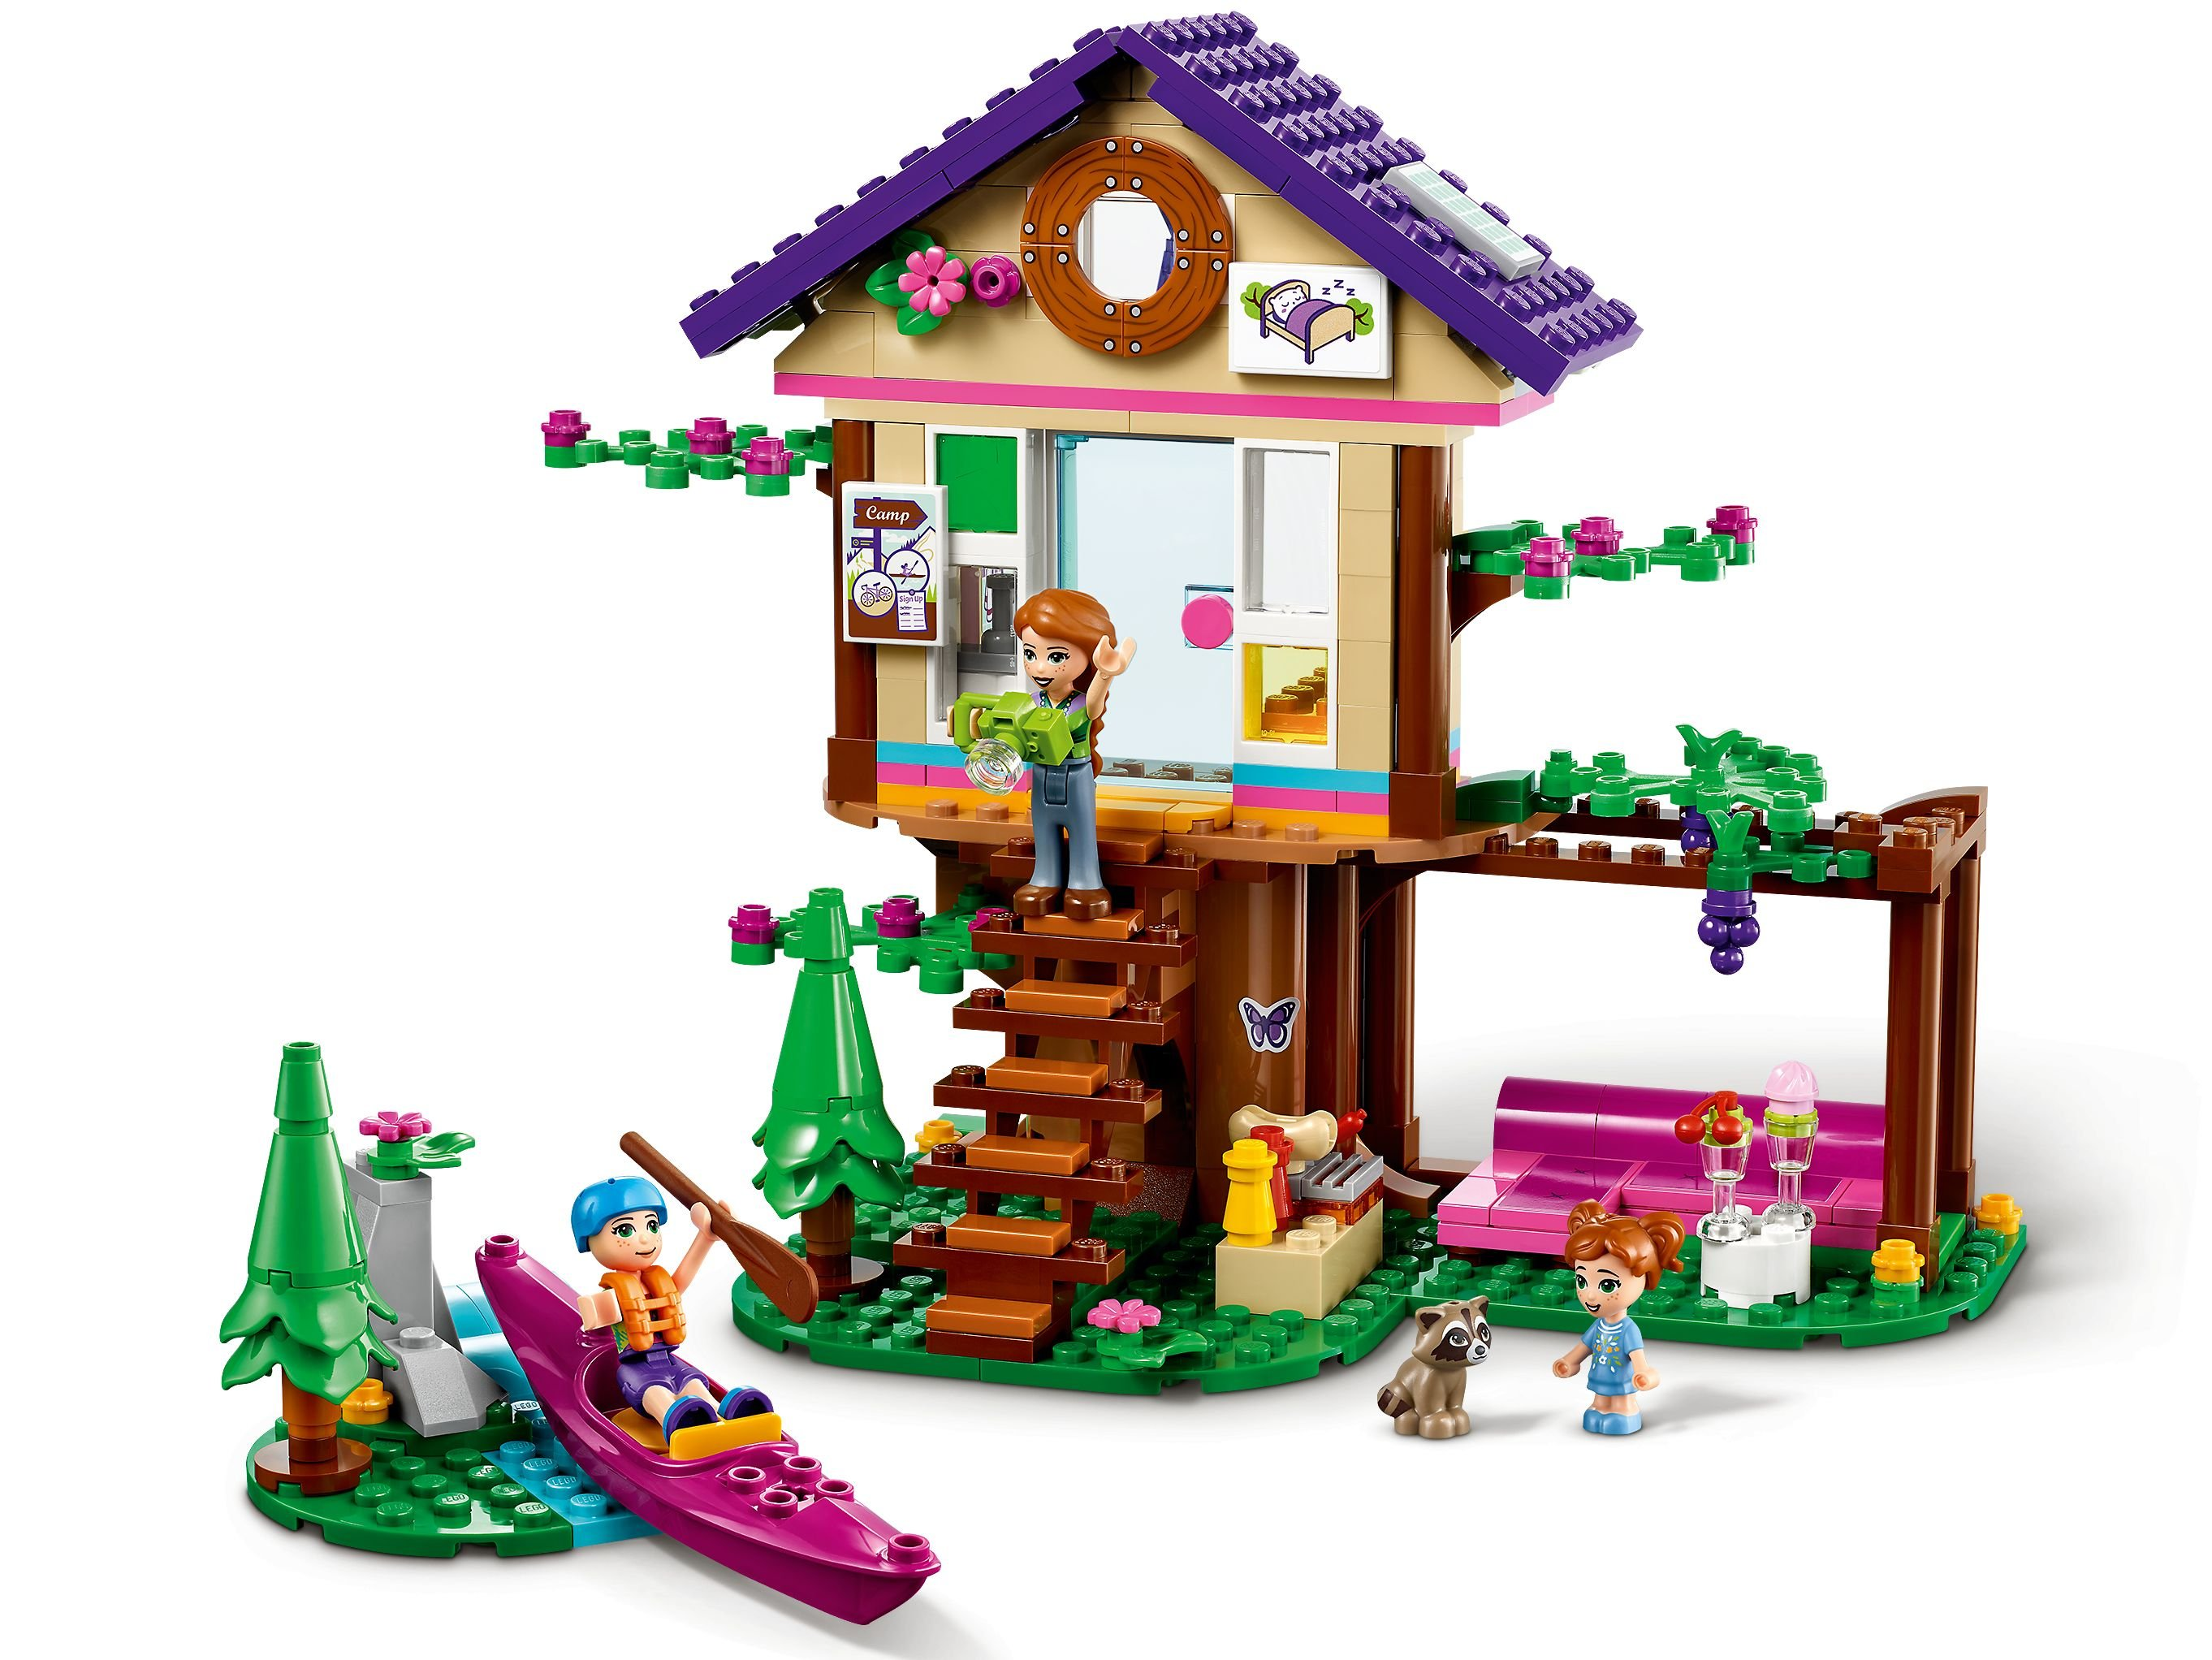 41679 IM Mehrfarbig Bausatz, BAUMHAUS WALD LEGO